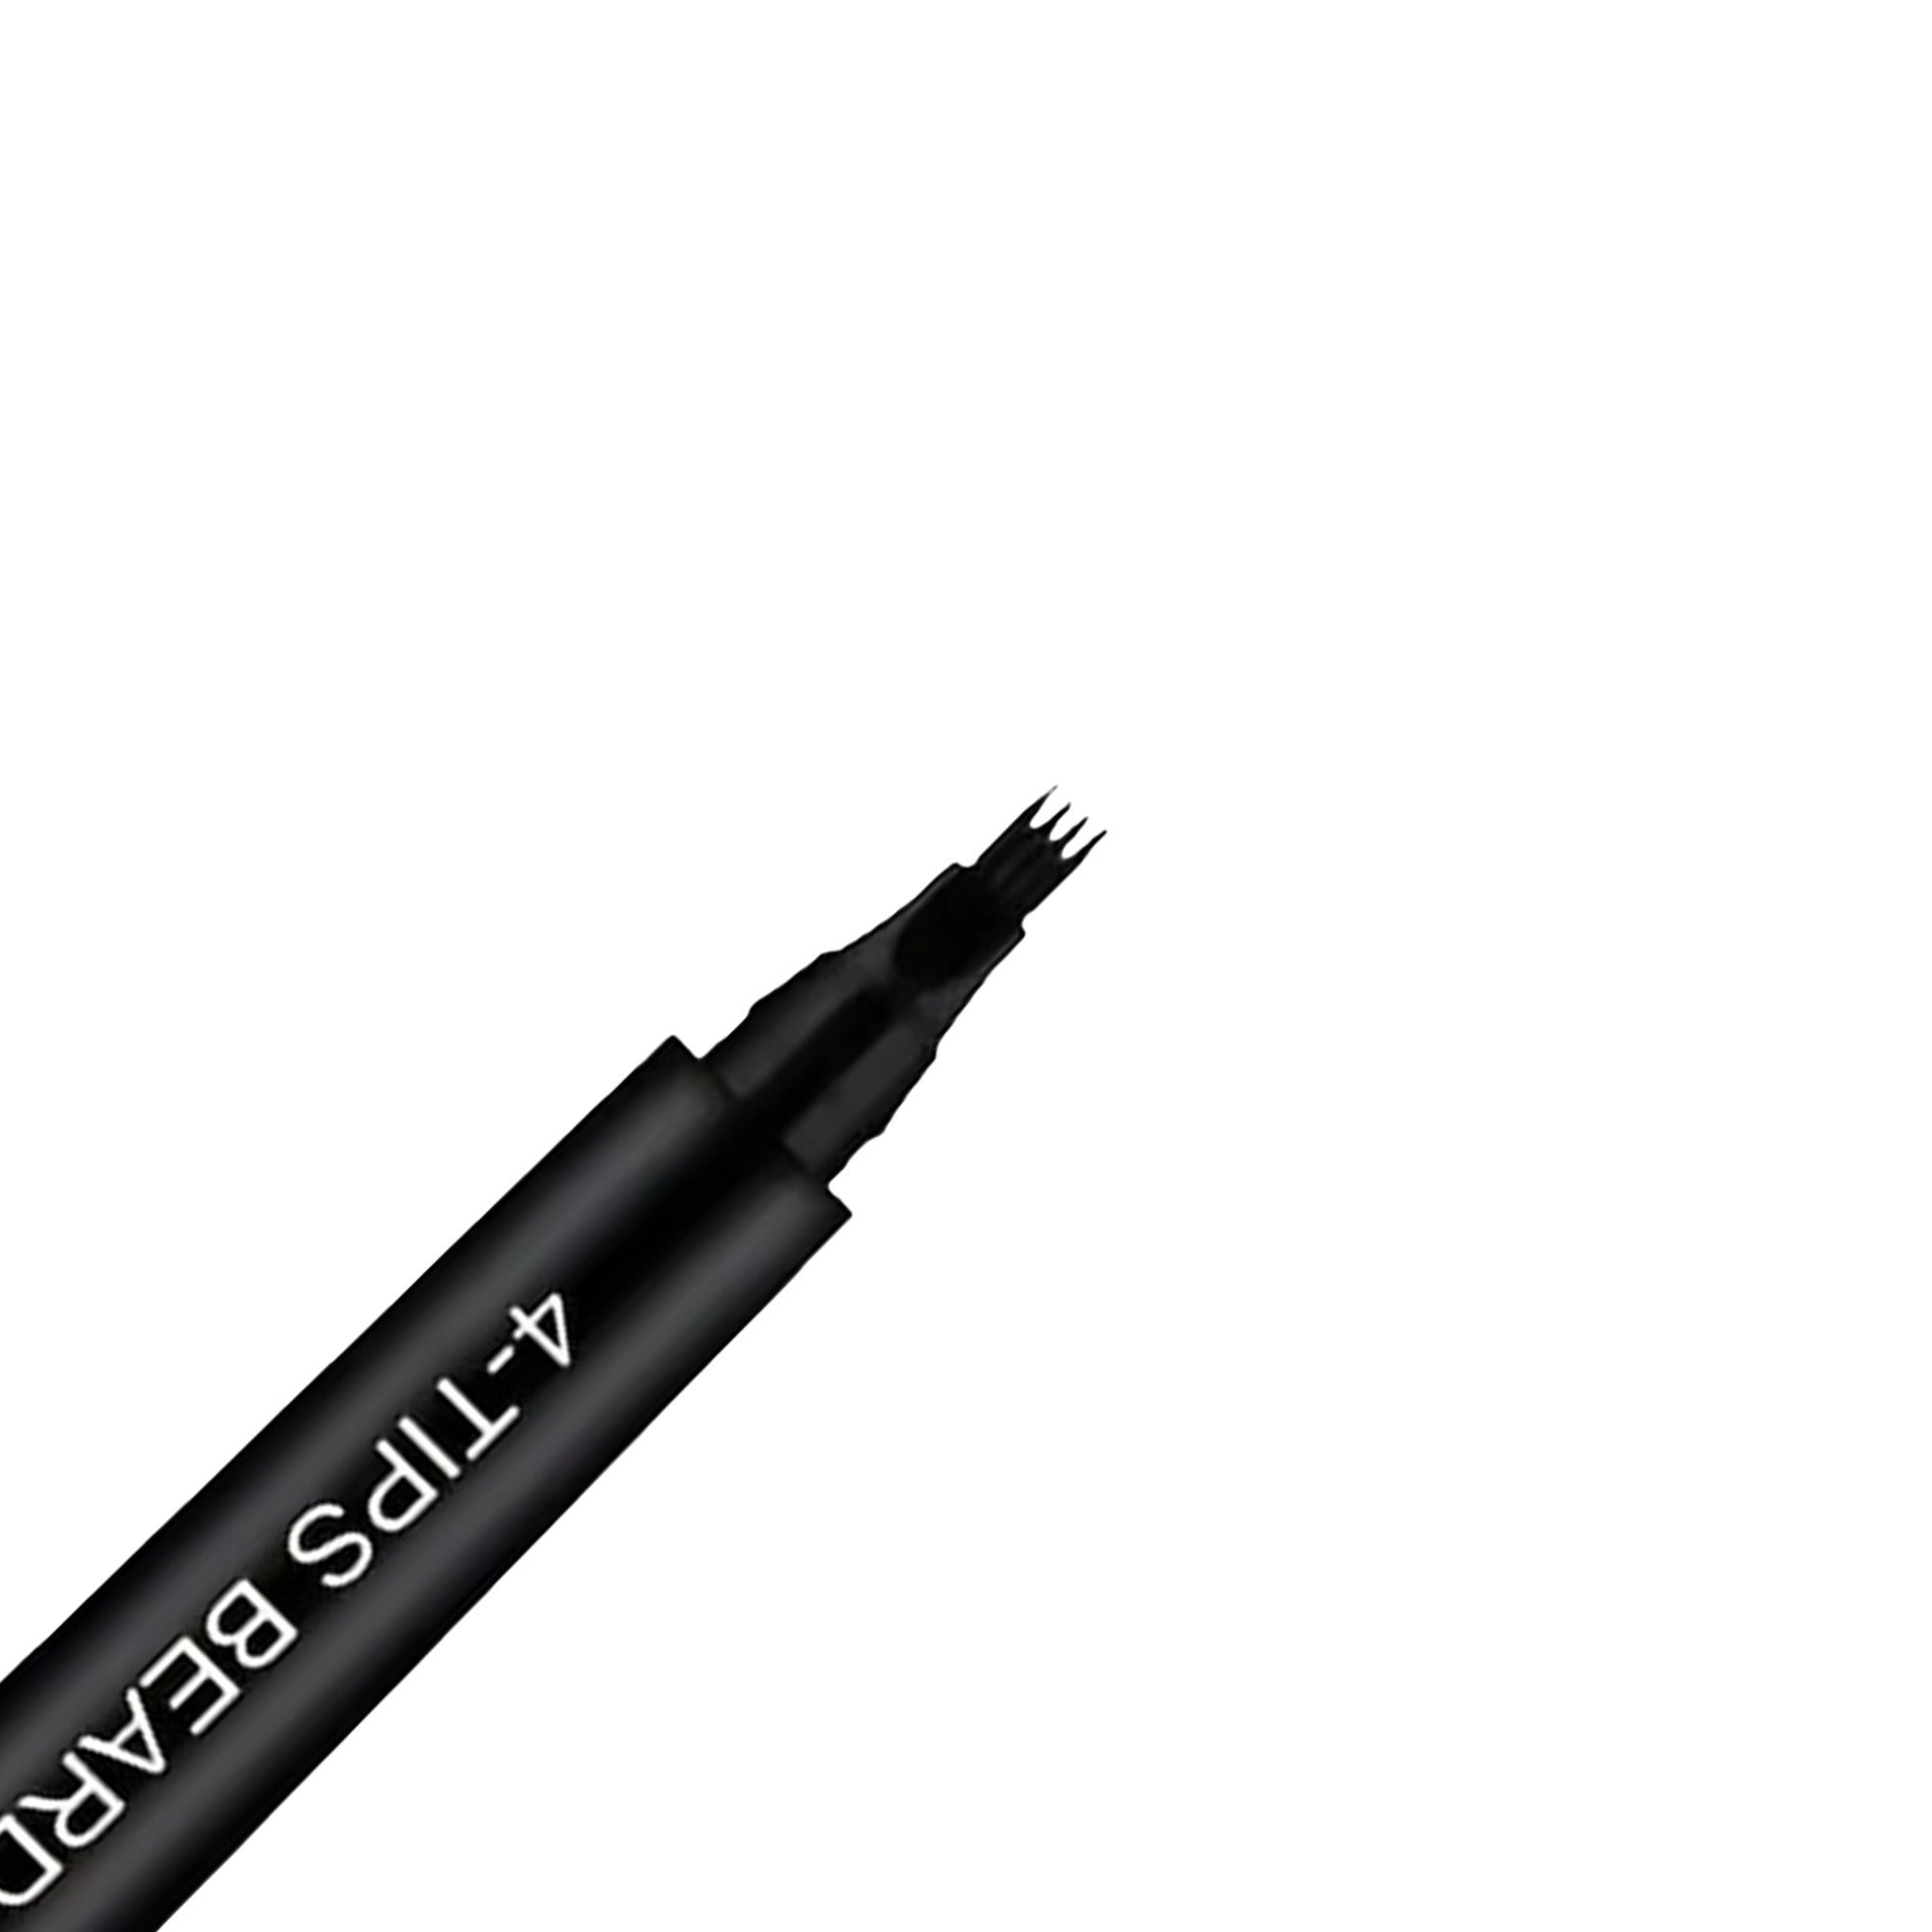 Bunee - Beard Dye Pen 4-Tips (Black) 5g